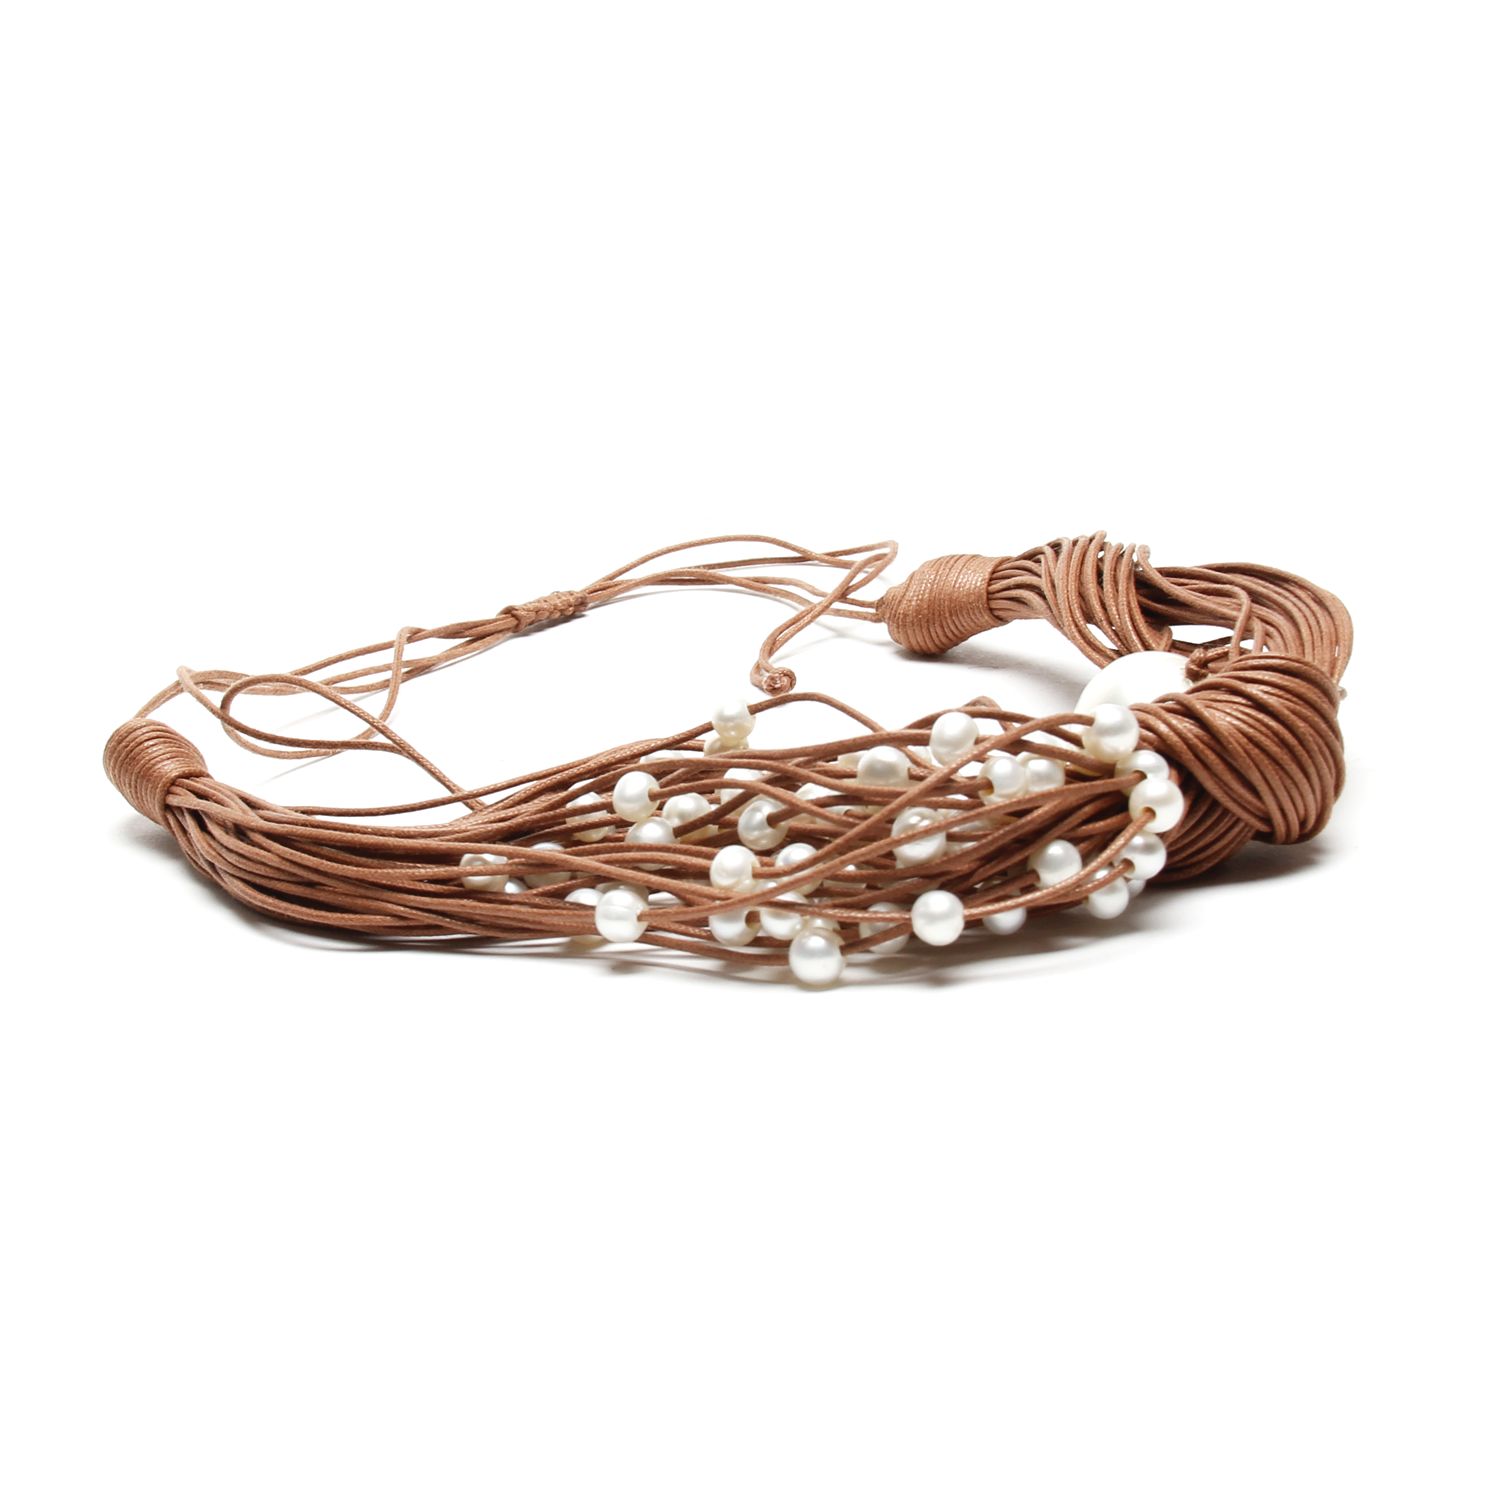 Oz & Ella Design: Pearl Scarf Necklace – Brown Product Image 2 of 4